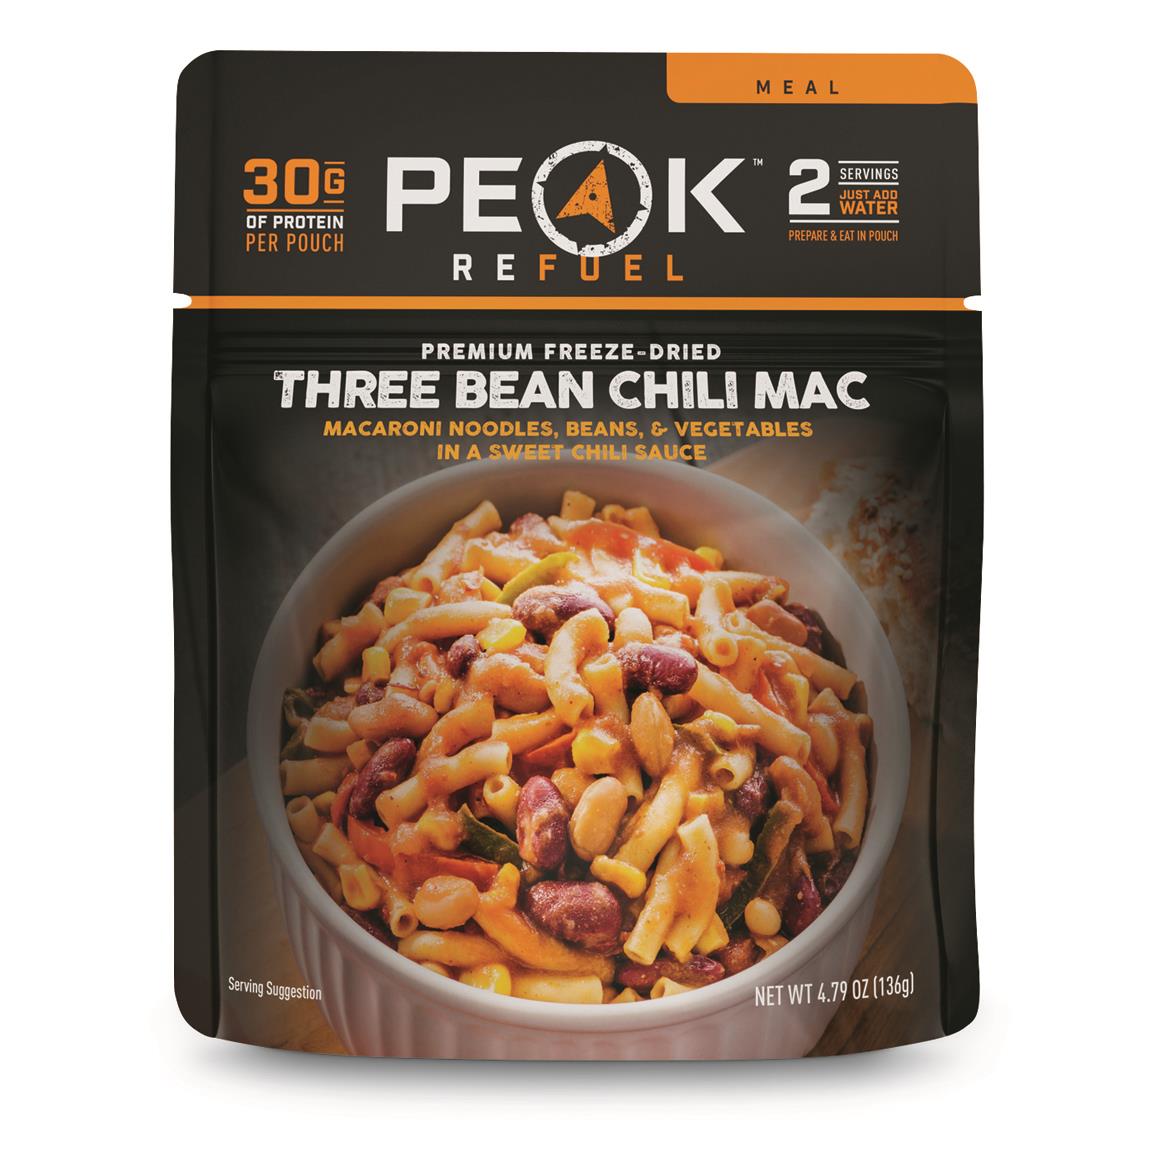 Peak Refuel Three Bean Chili Mac Freeze-dried Meal